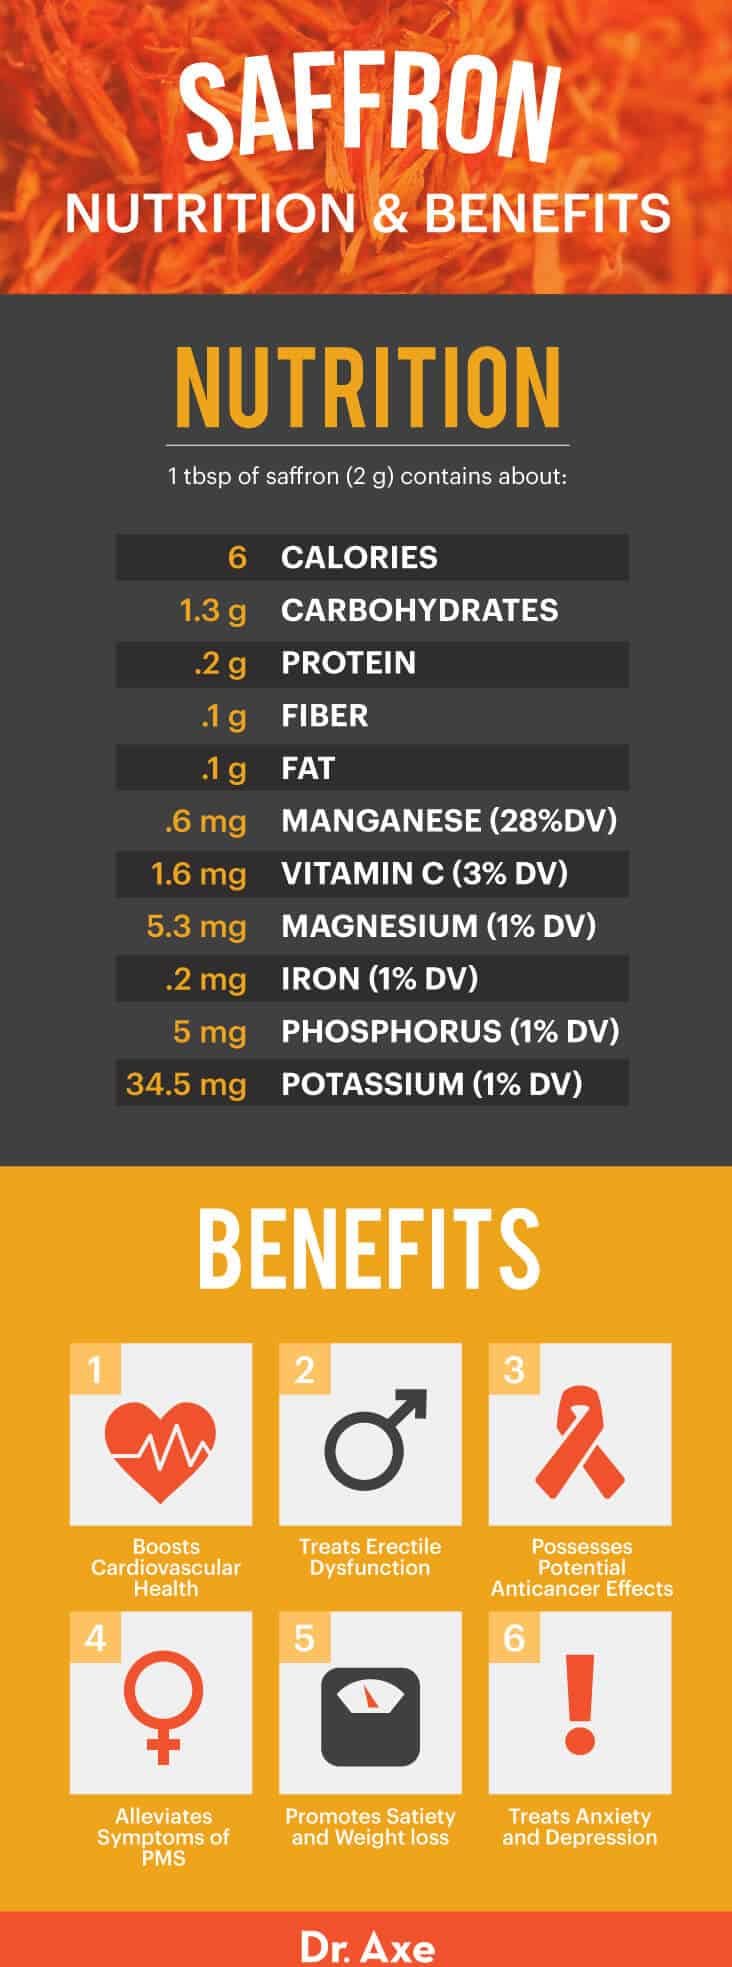 Saffron nutrition and benefits - Dr. Axe